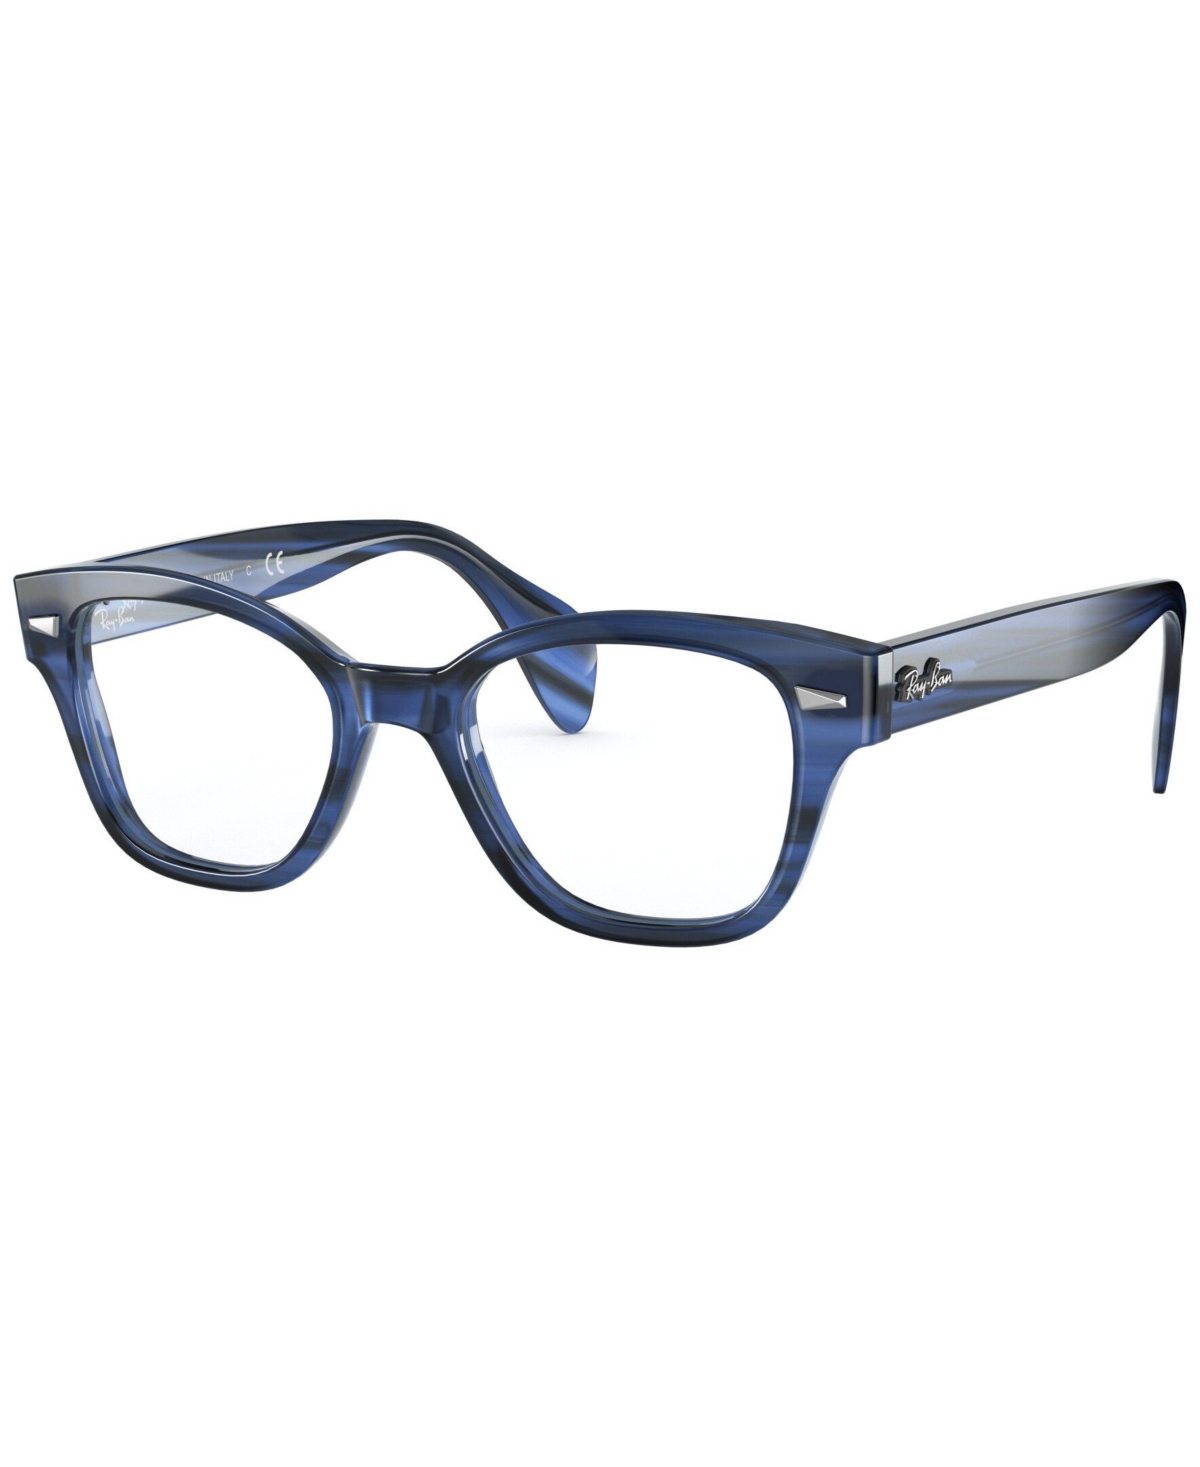 RX0880 Unisex Square Eyeglasses - Striped Blue